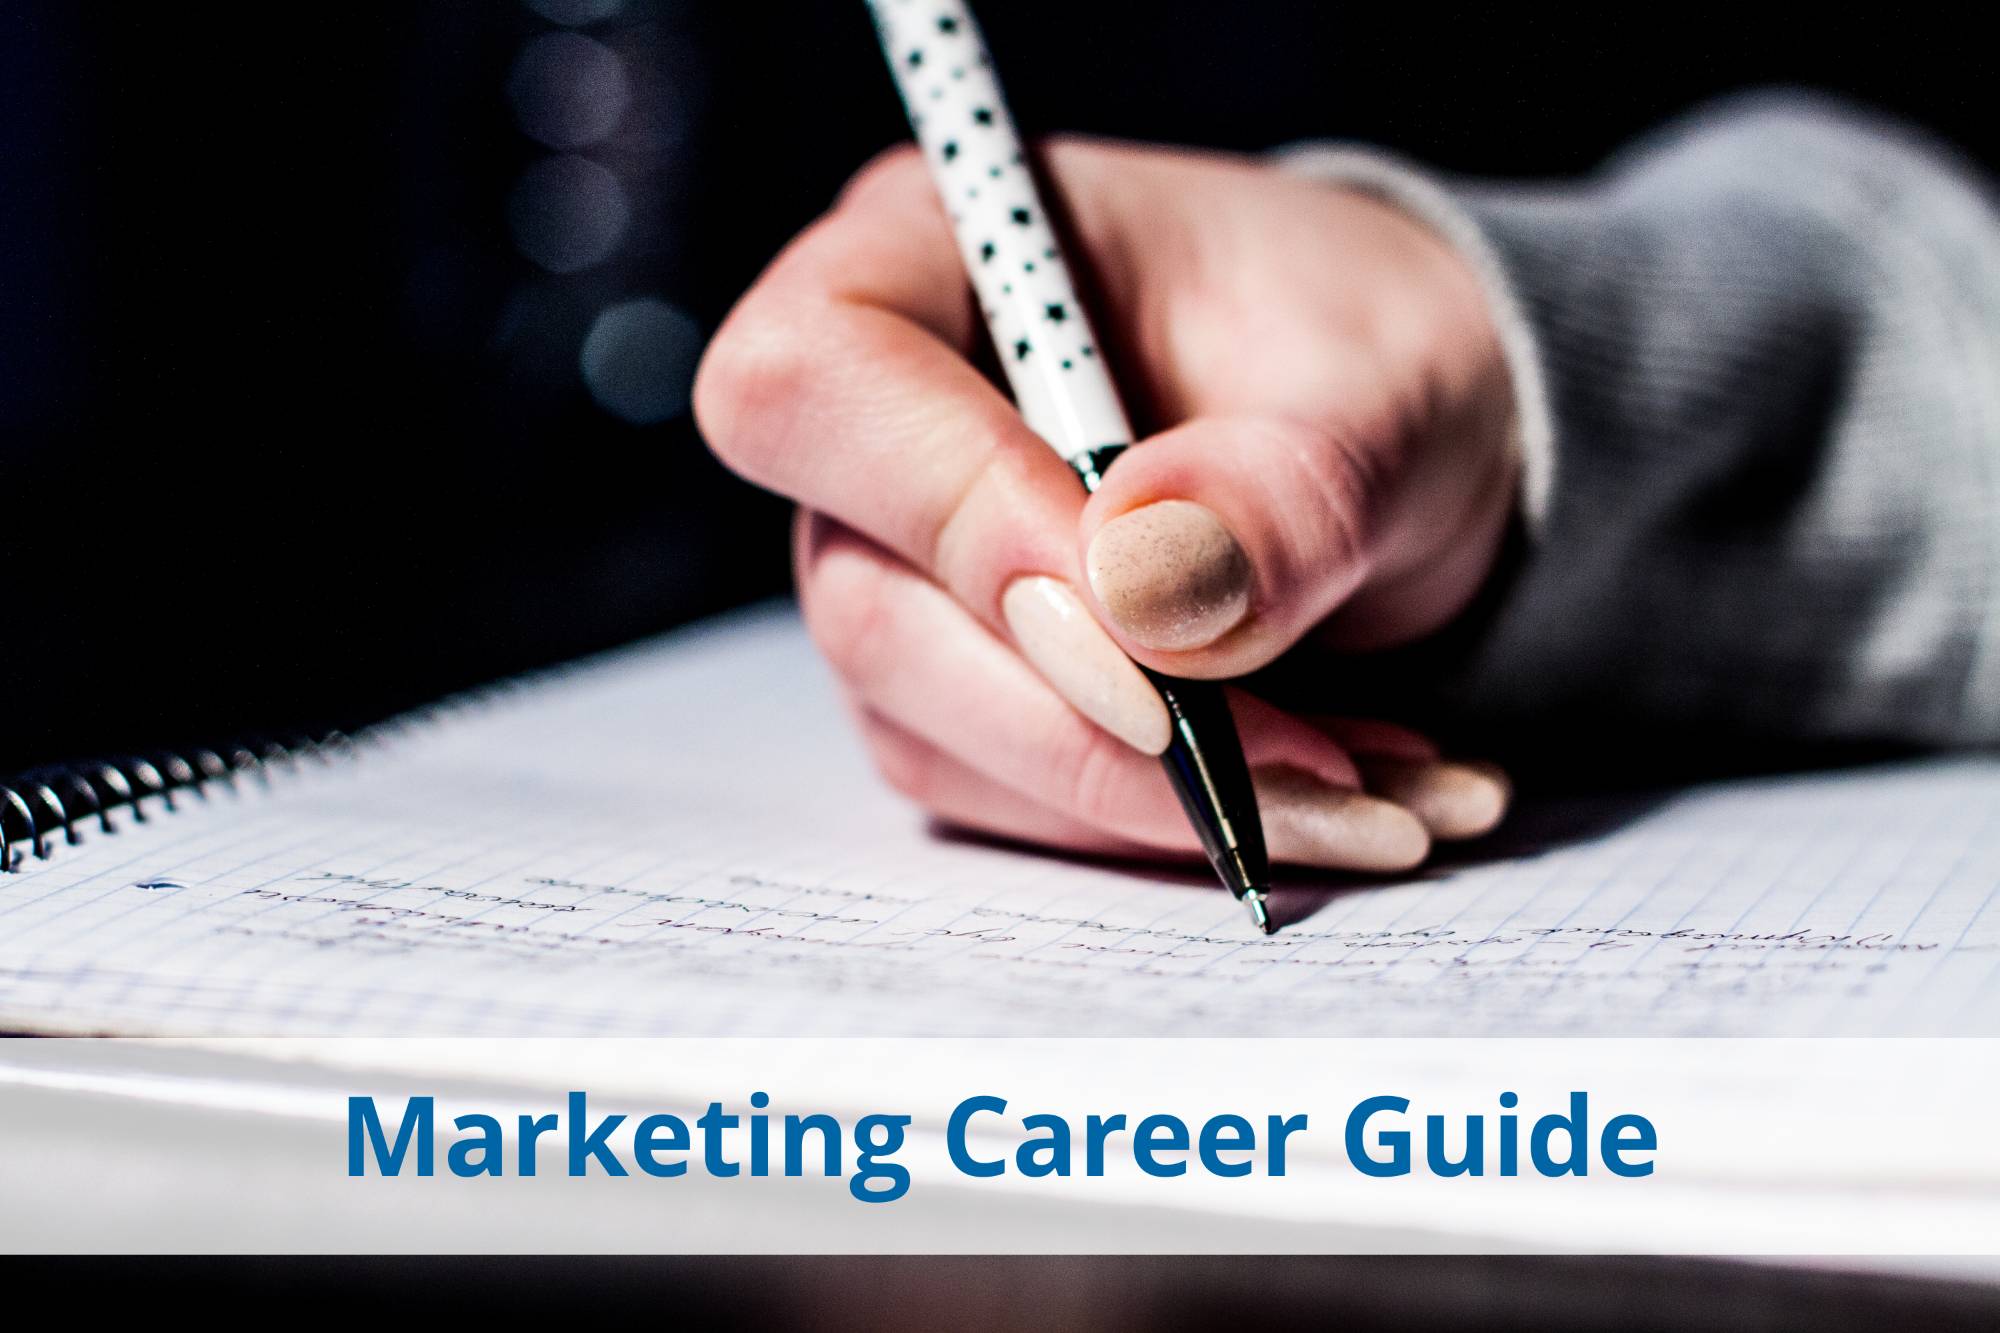 Marketing career guide